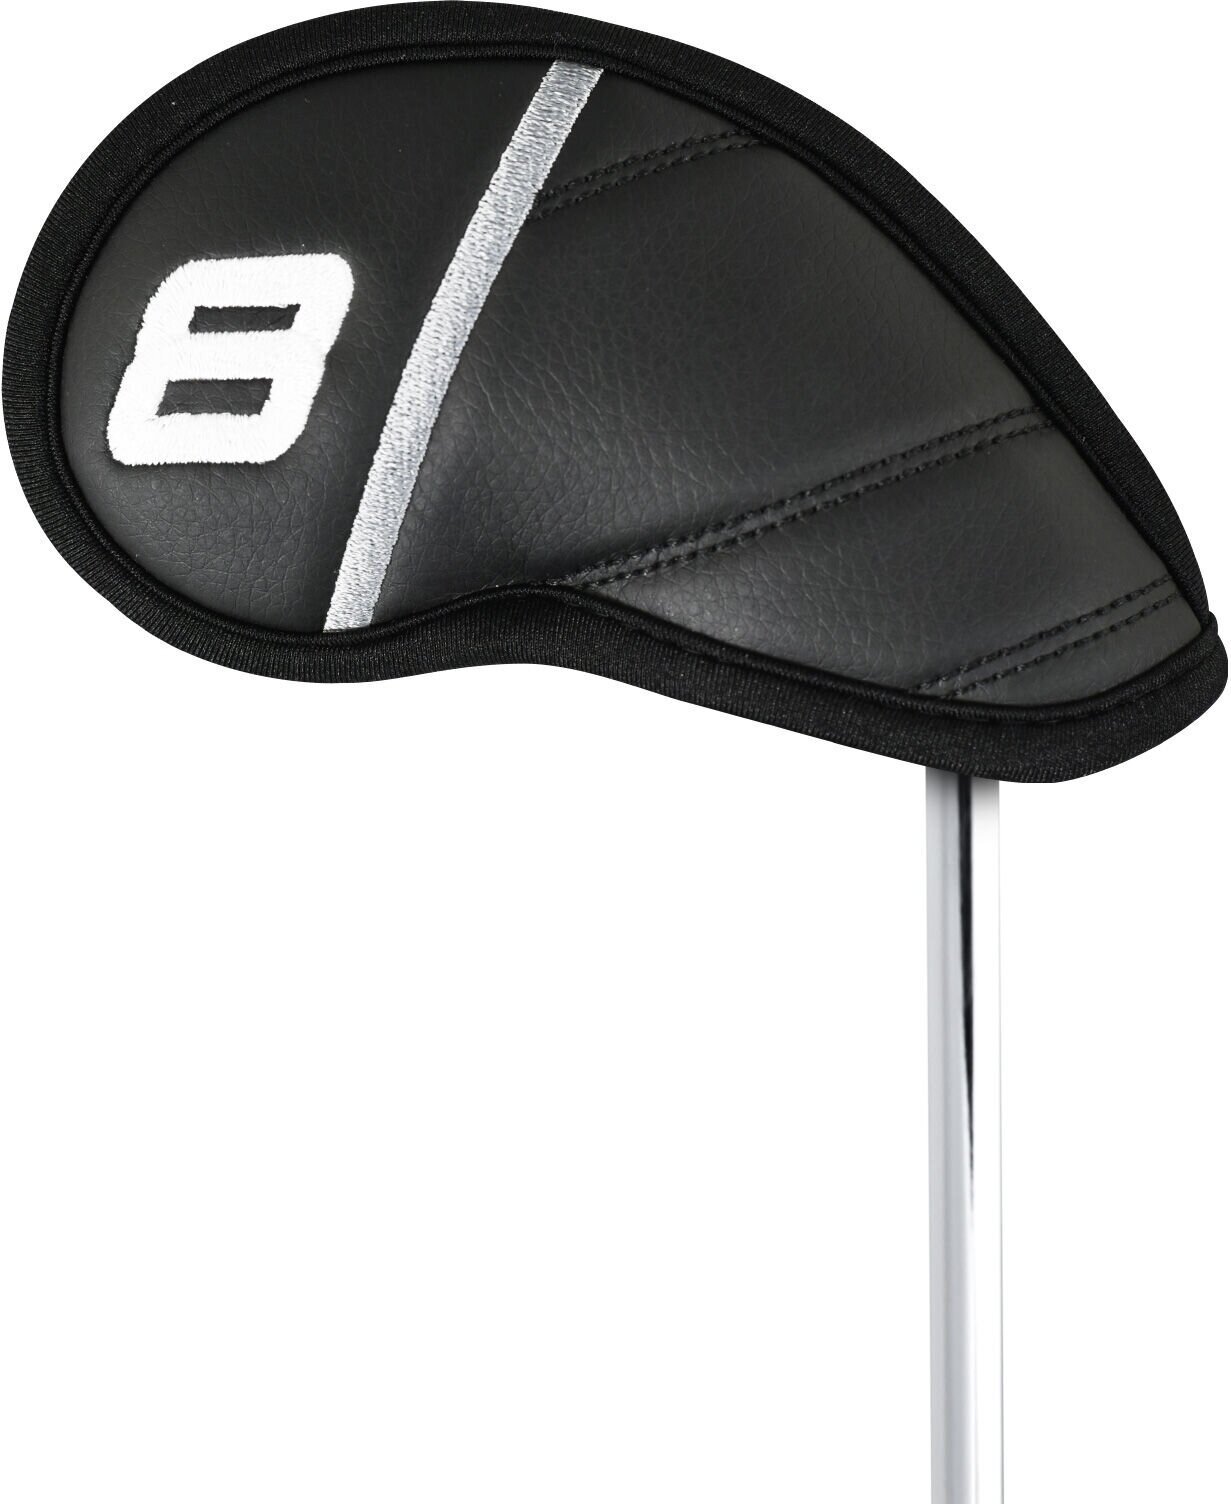 Mailanpäänsuojus Masters Golf Headkase II Iron Covers 4-SW Black